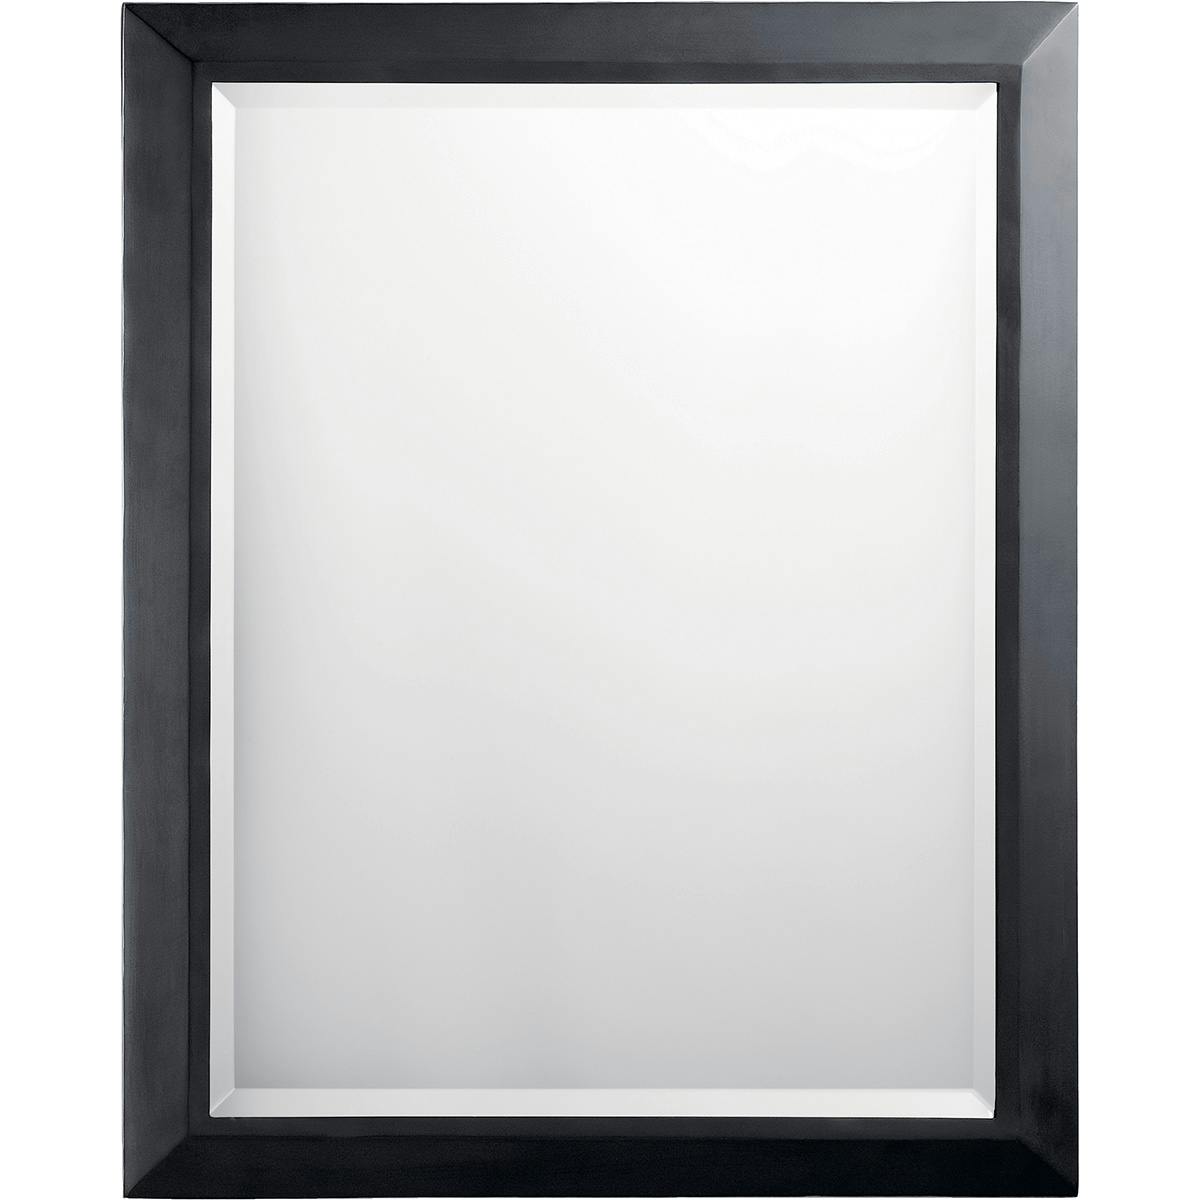 Classic Rectangular Mirror Black on a white background